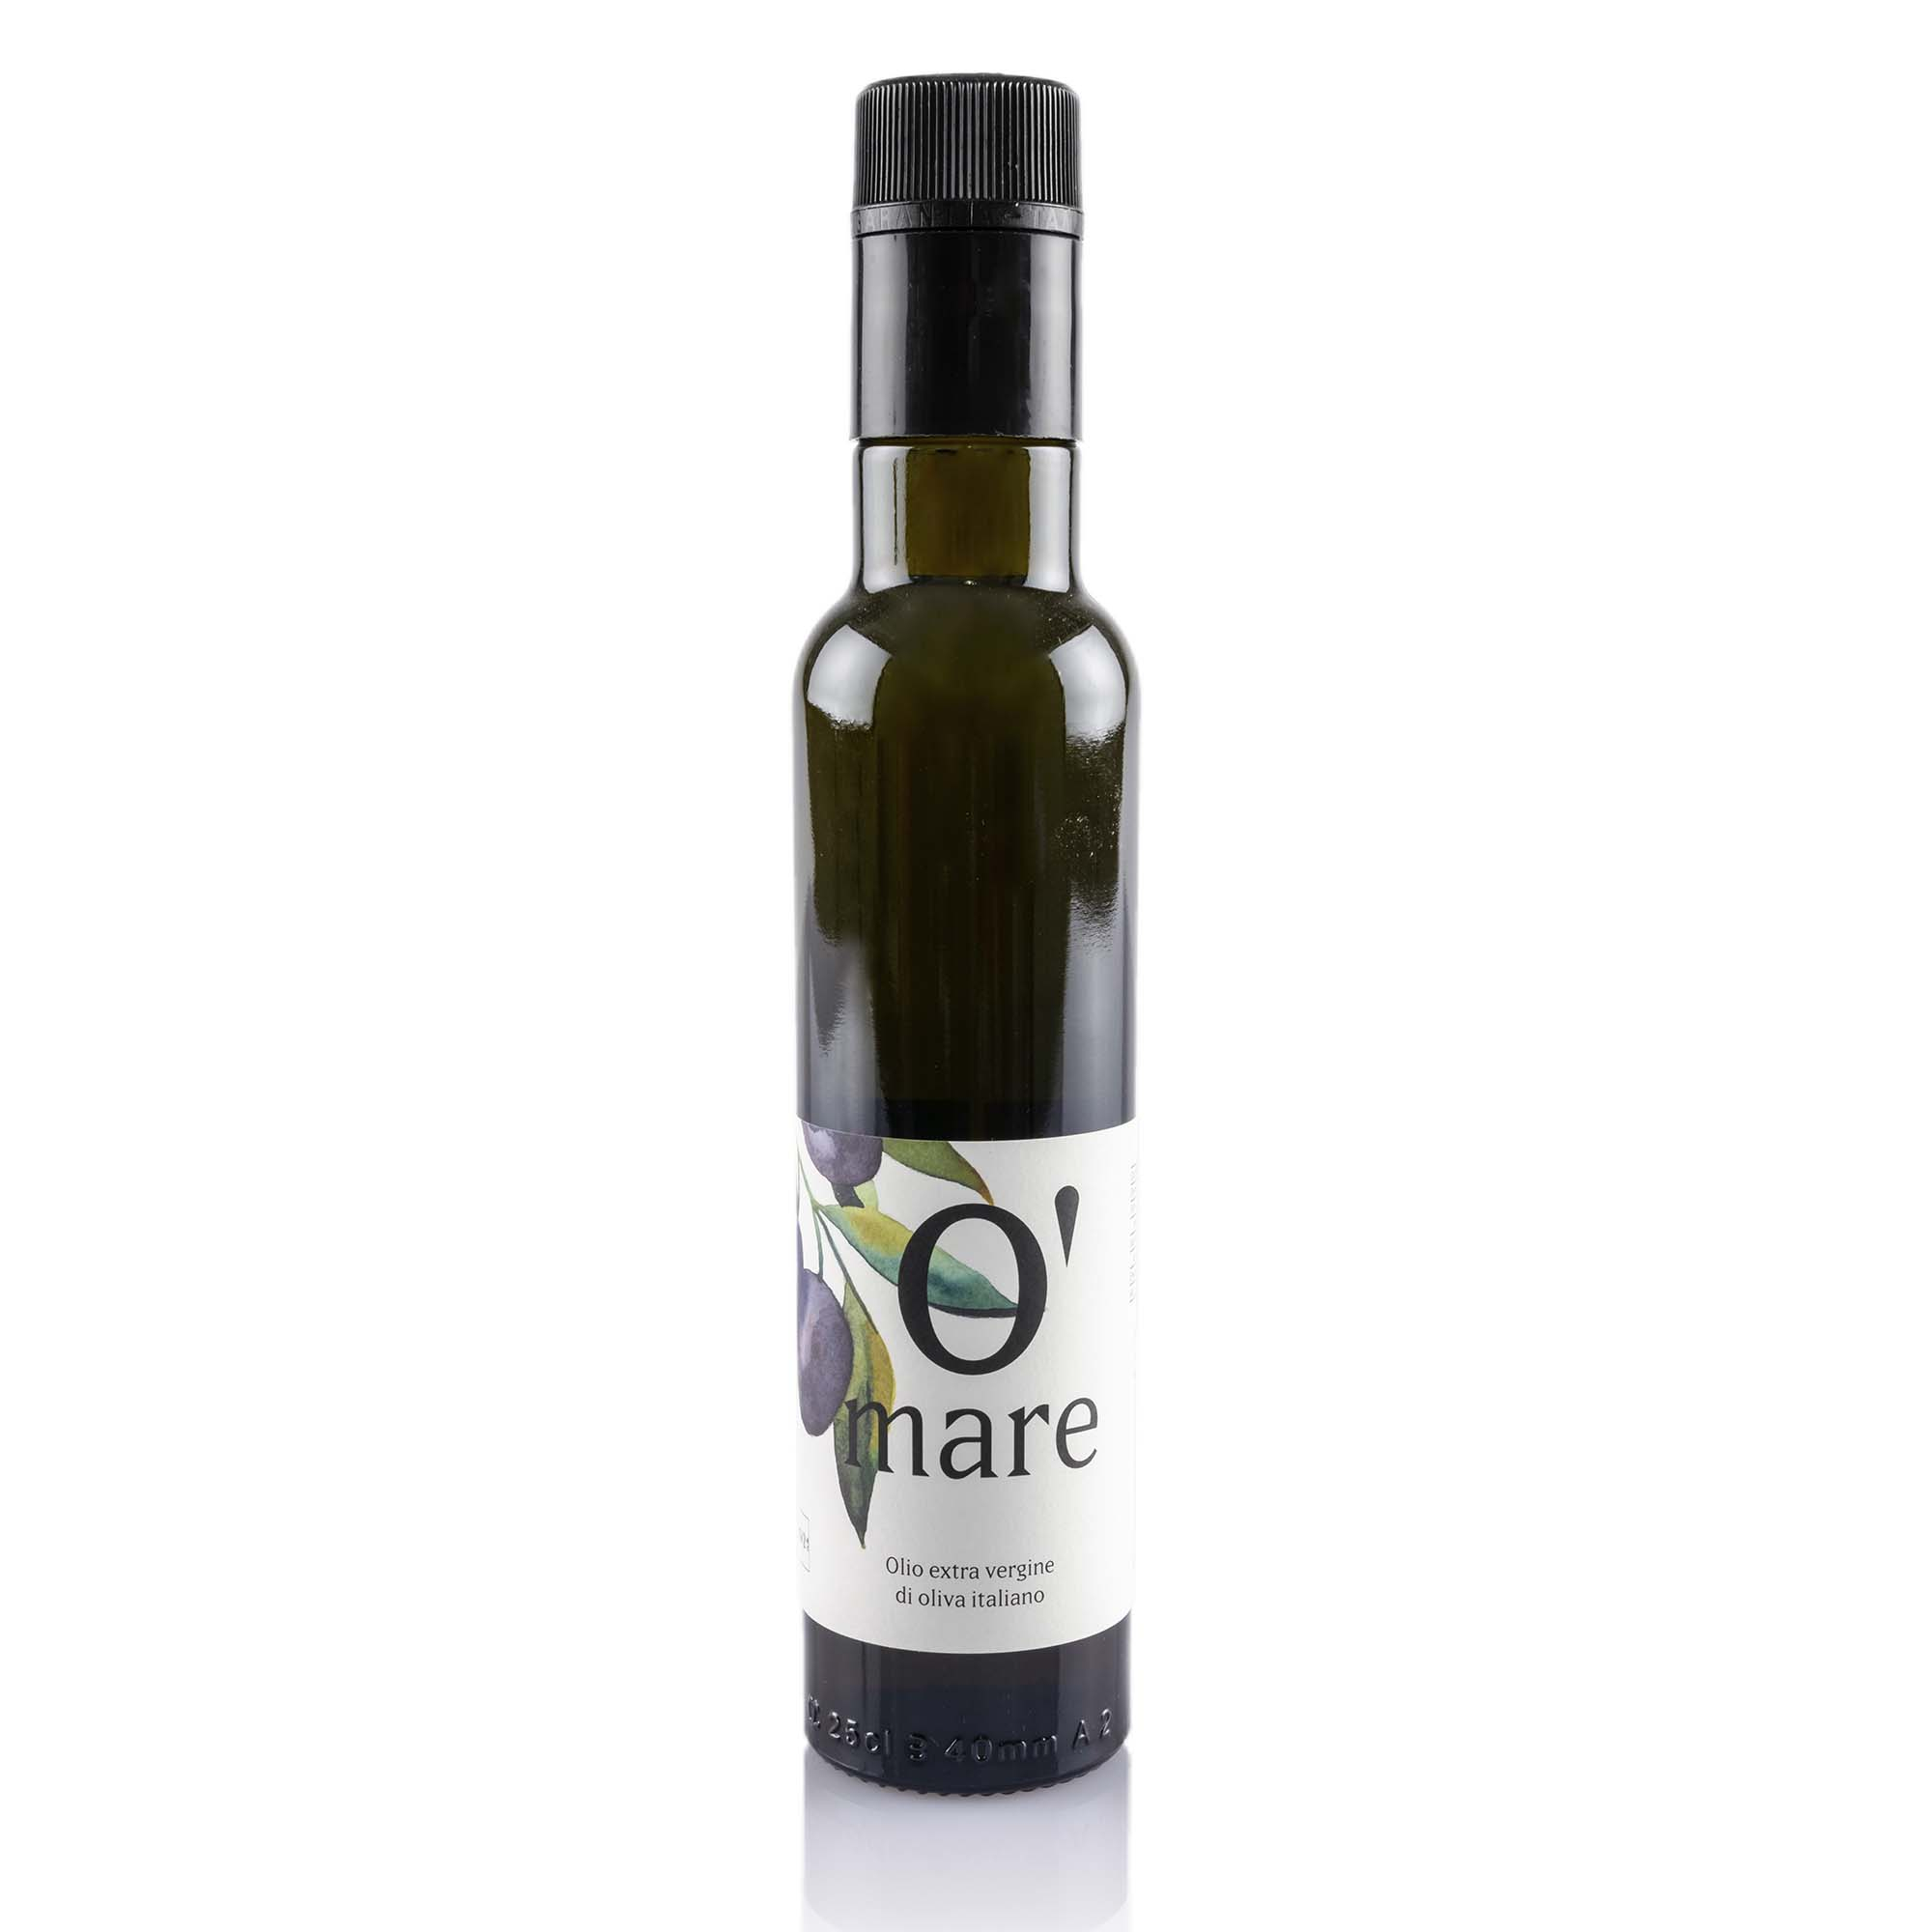 Olivenöl o'mare, 250ml